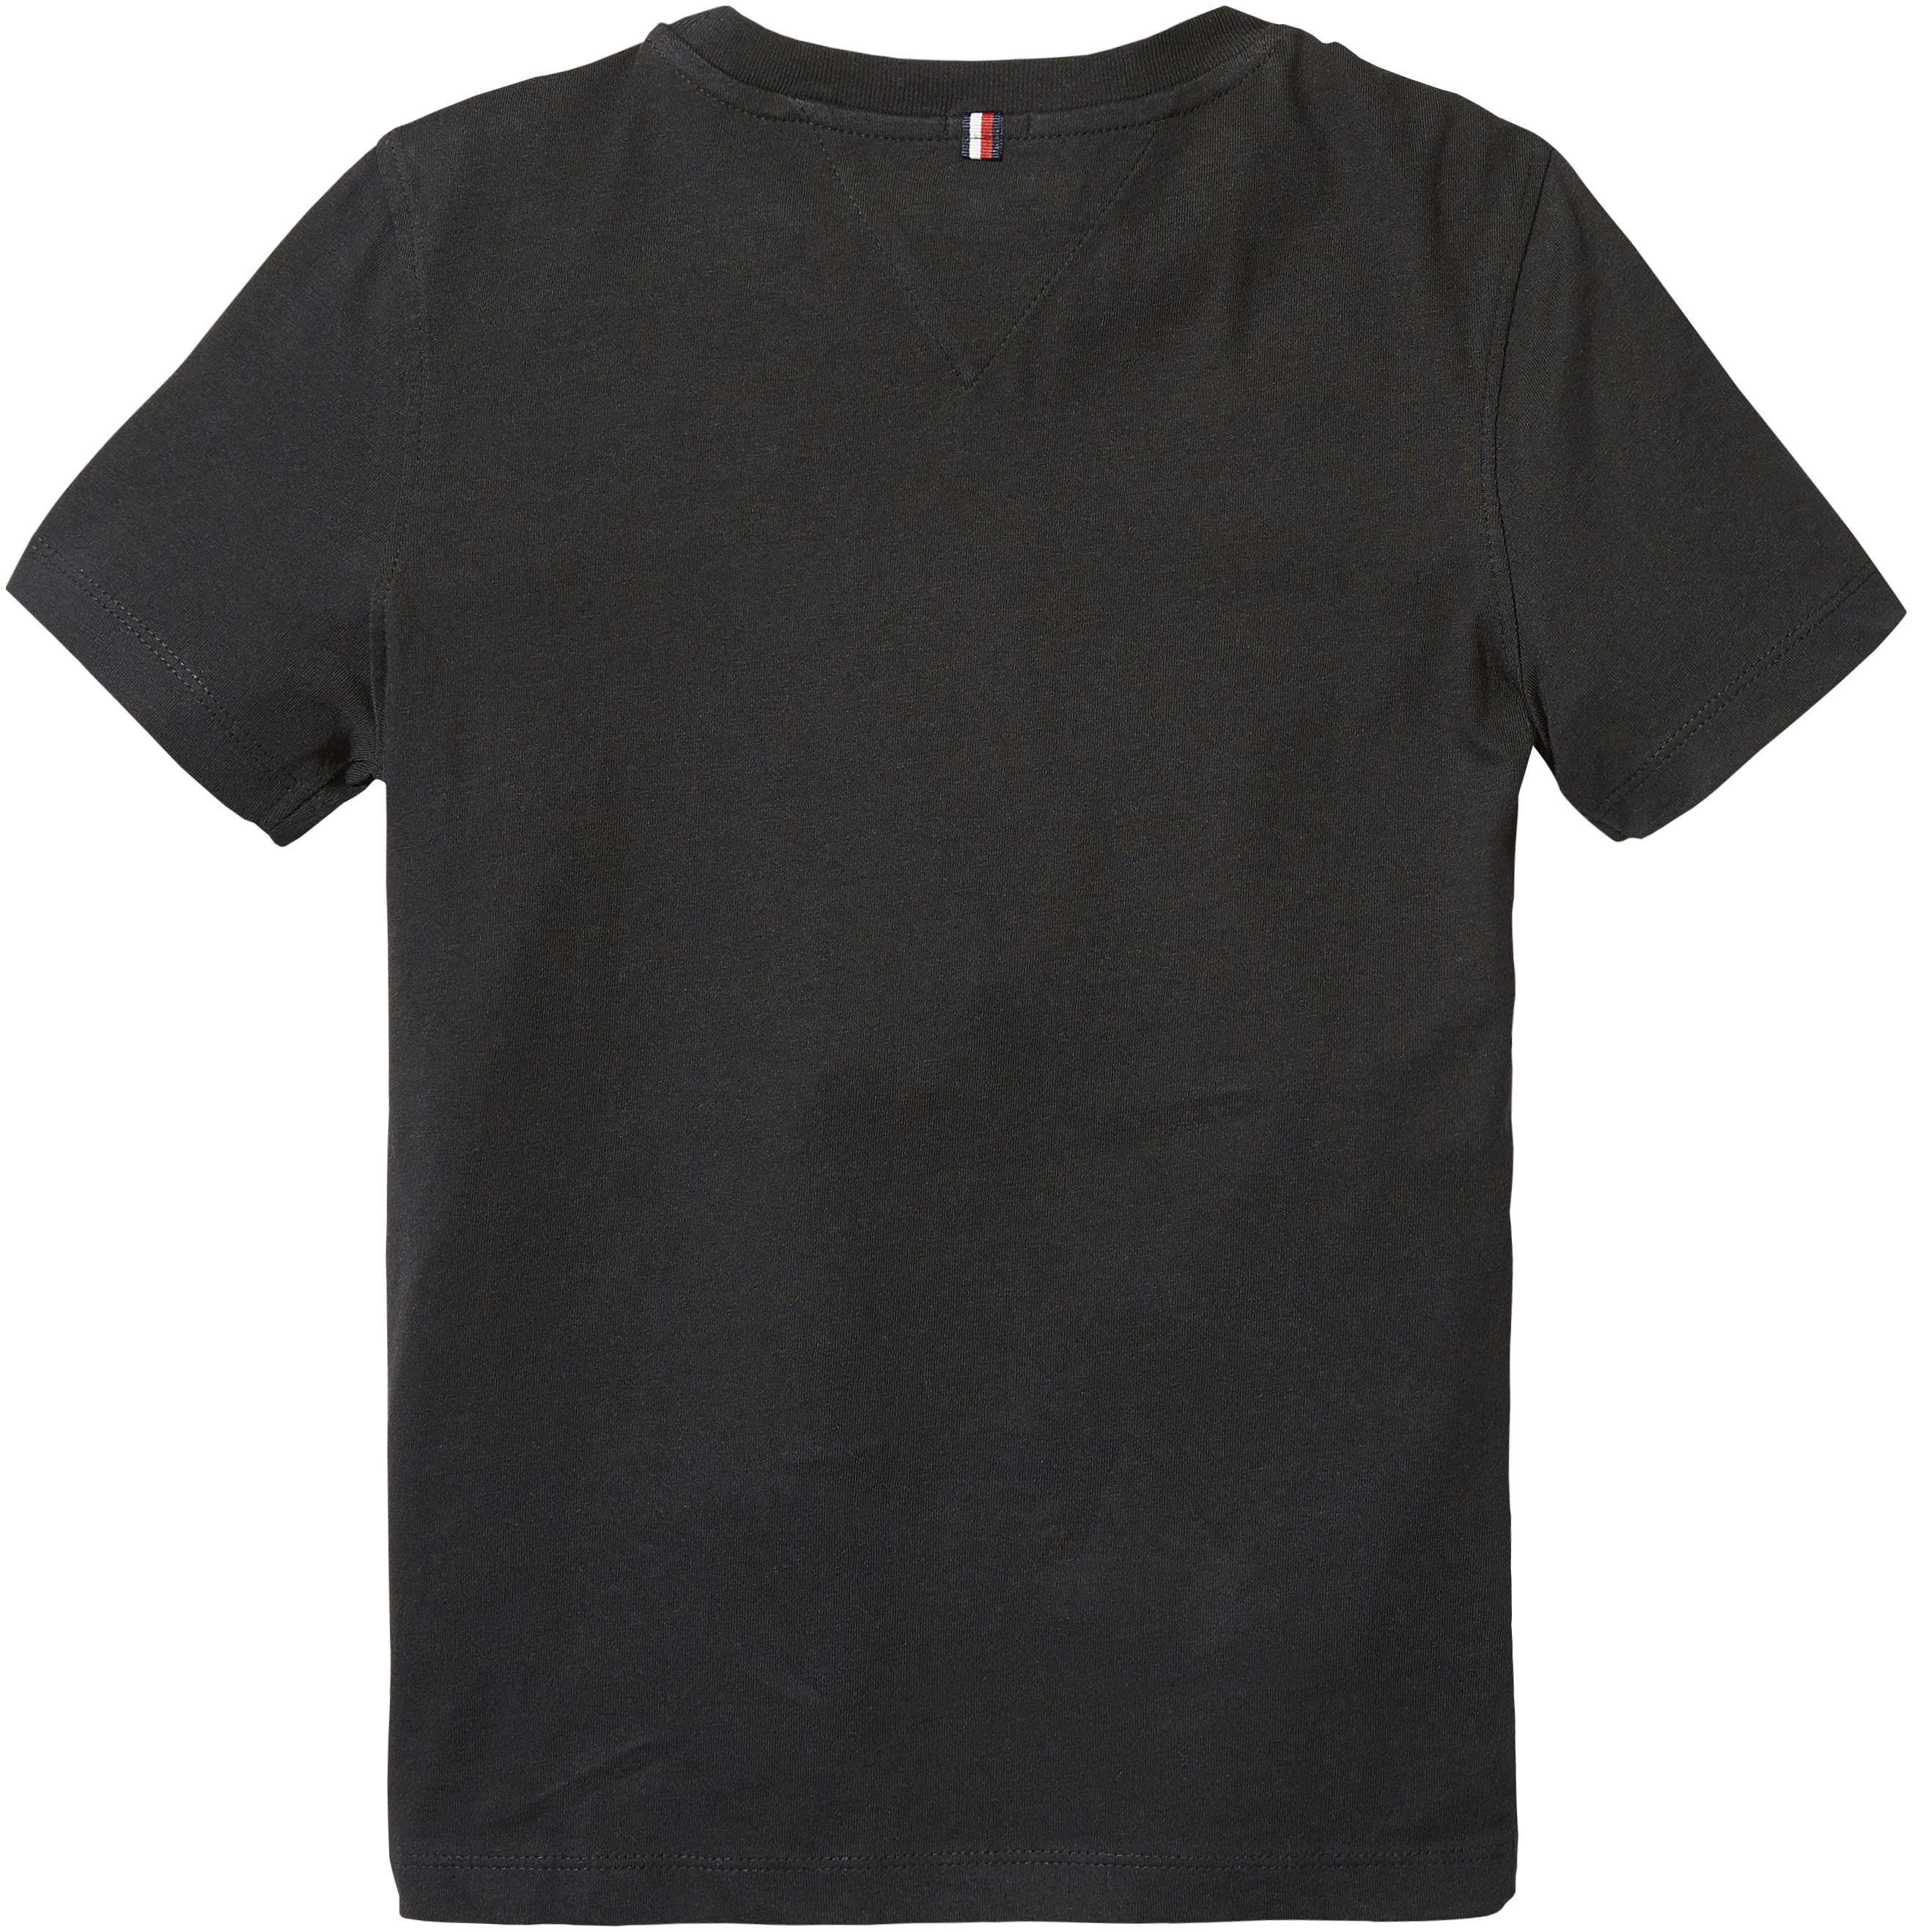 Tommy Hilfiger T-Shirt BOYS Junior KNIT Kinder Jungen CN BASIC MiniMe,für Kids